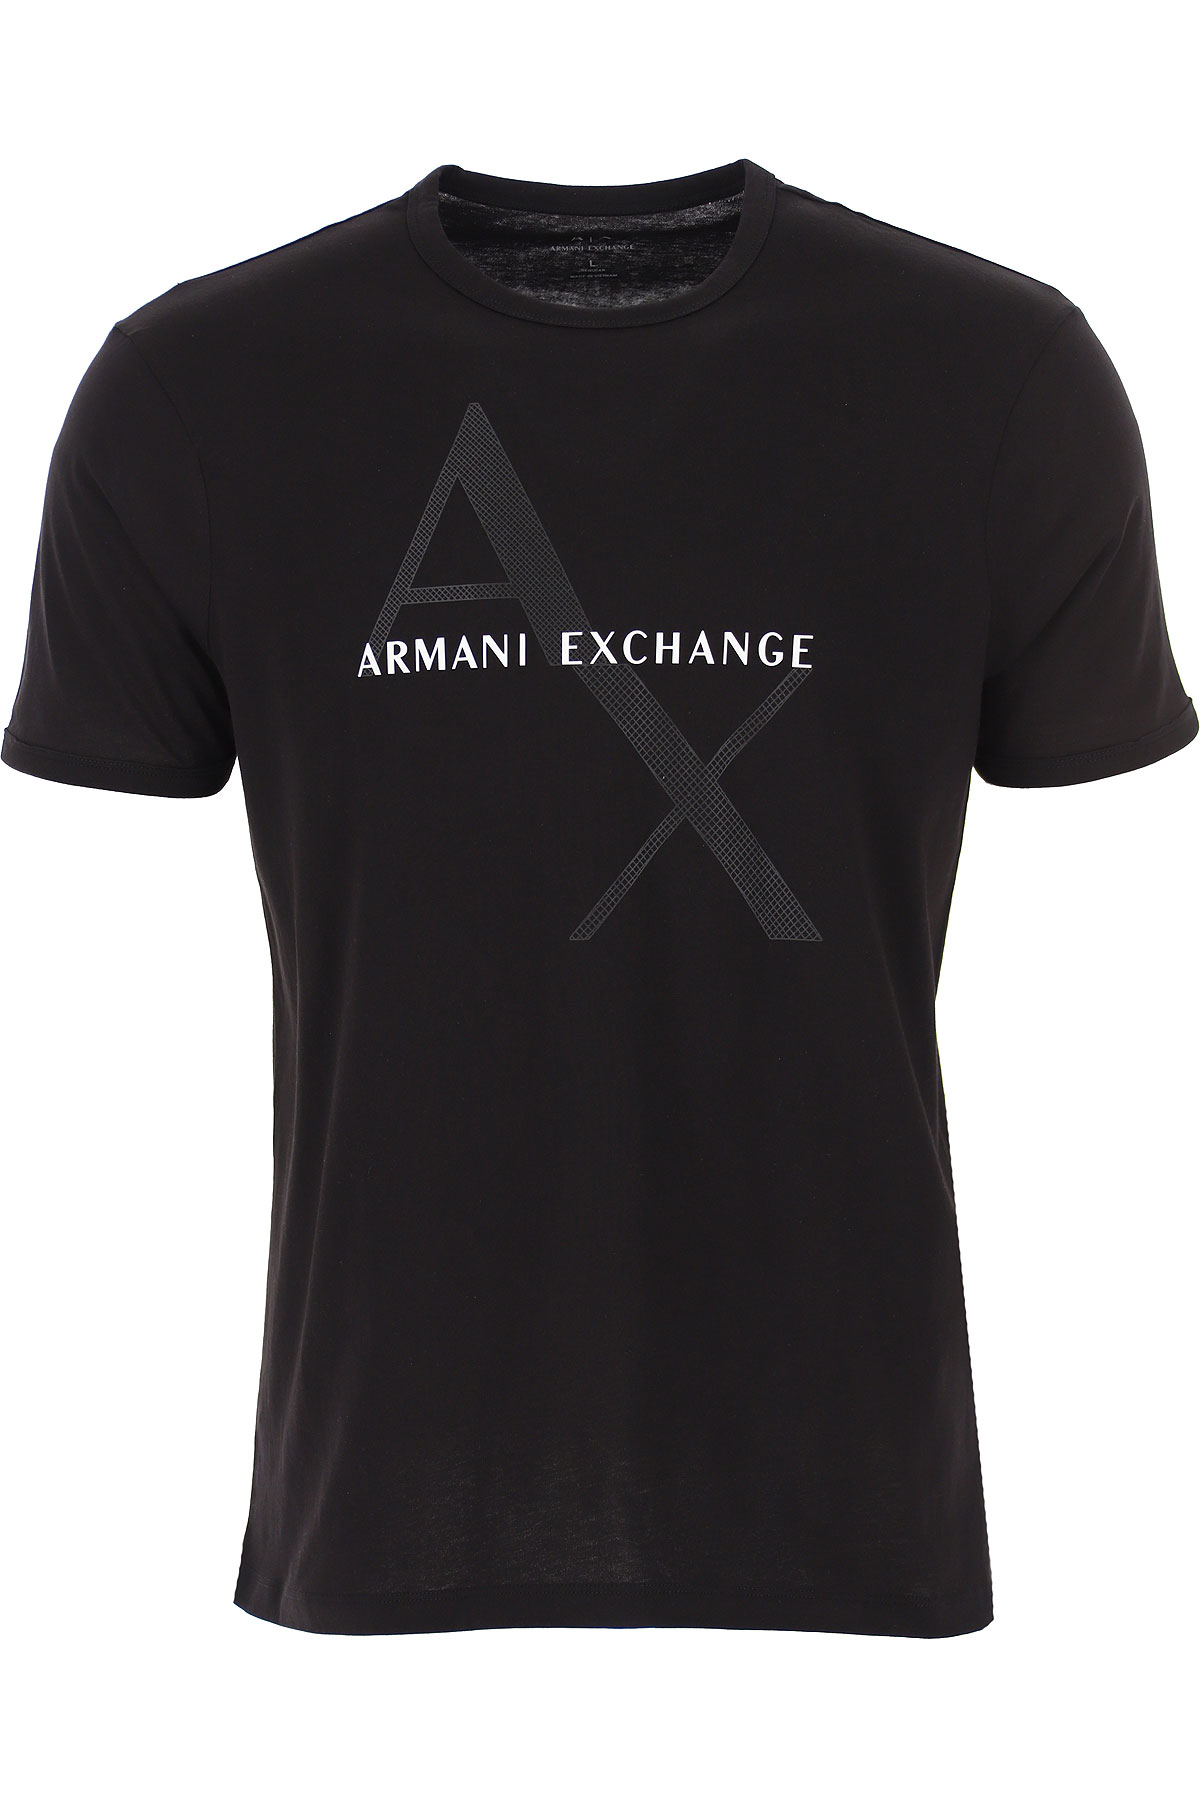 Mens Clothing Armani Exchange, Style code: 8nzt76-z8h4z-1200